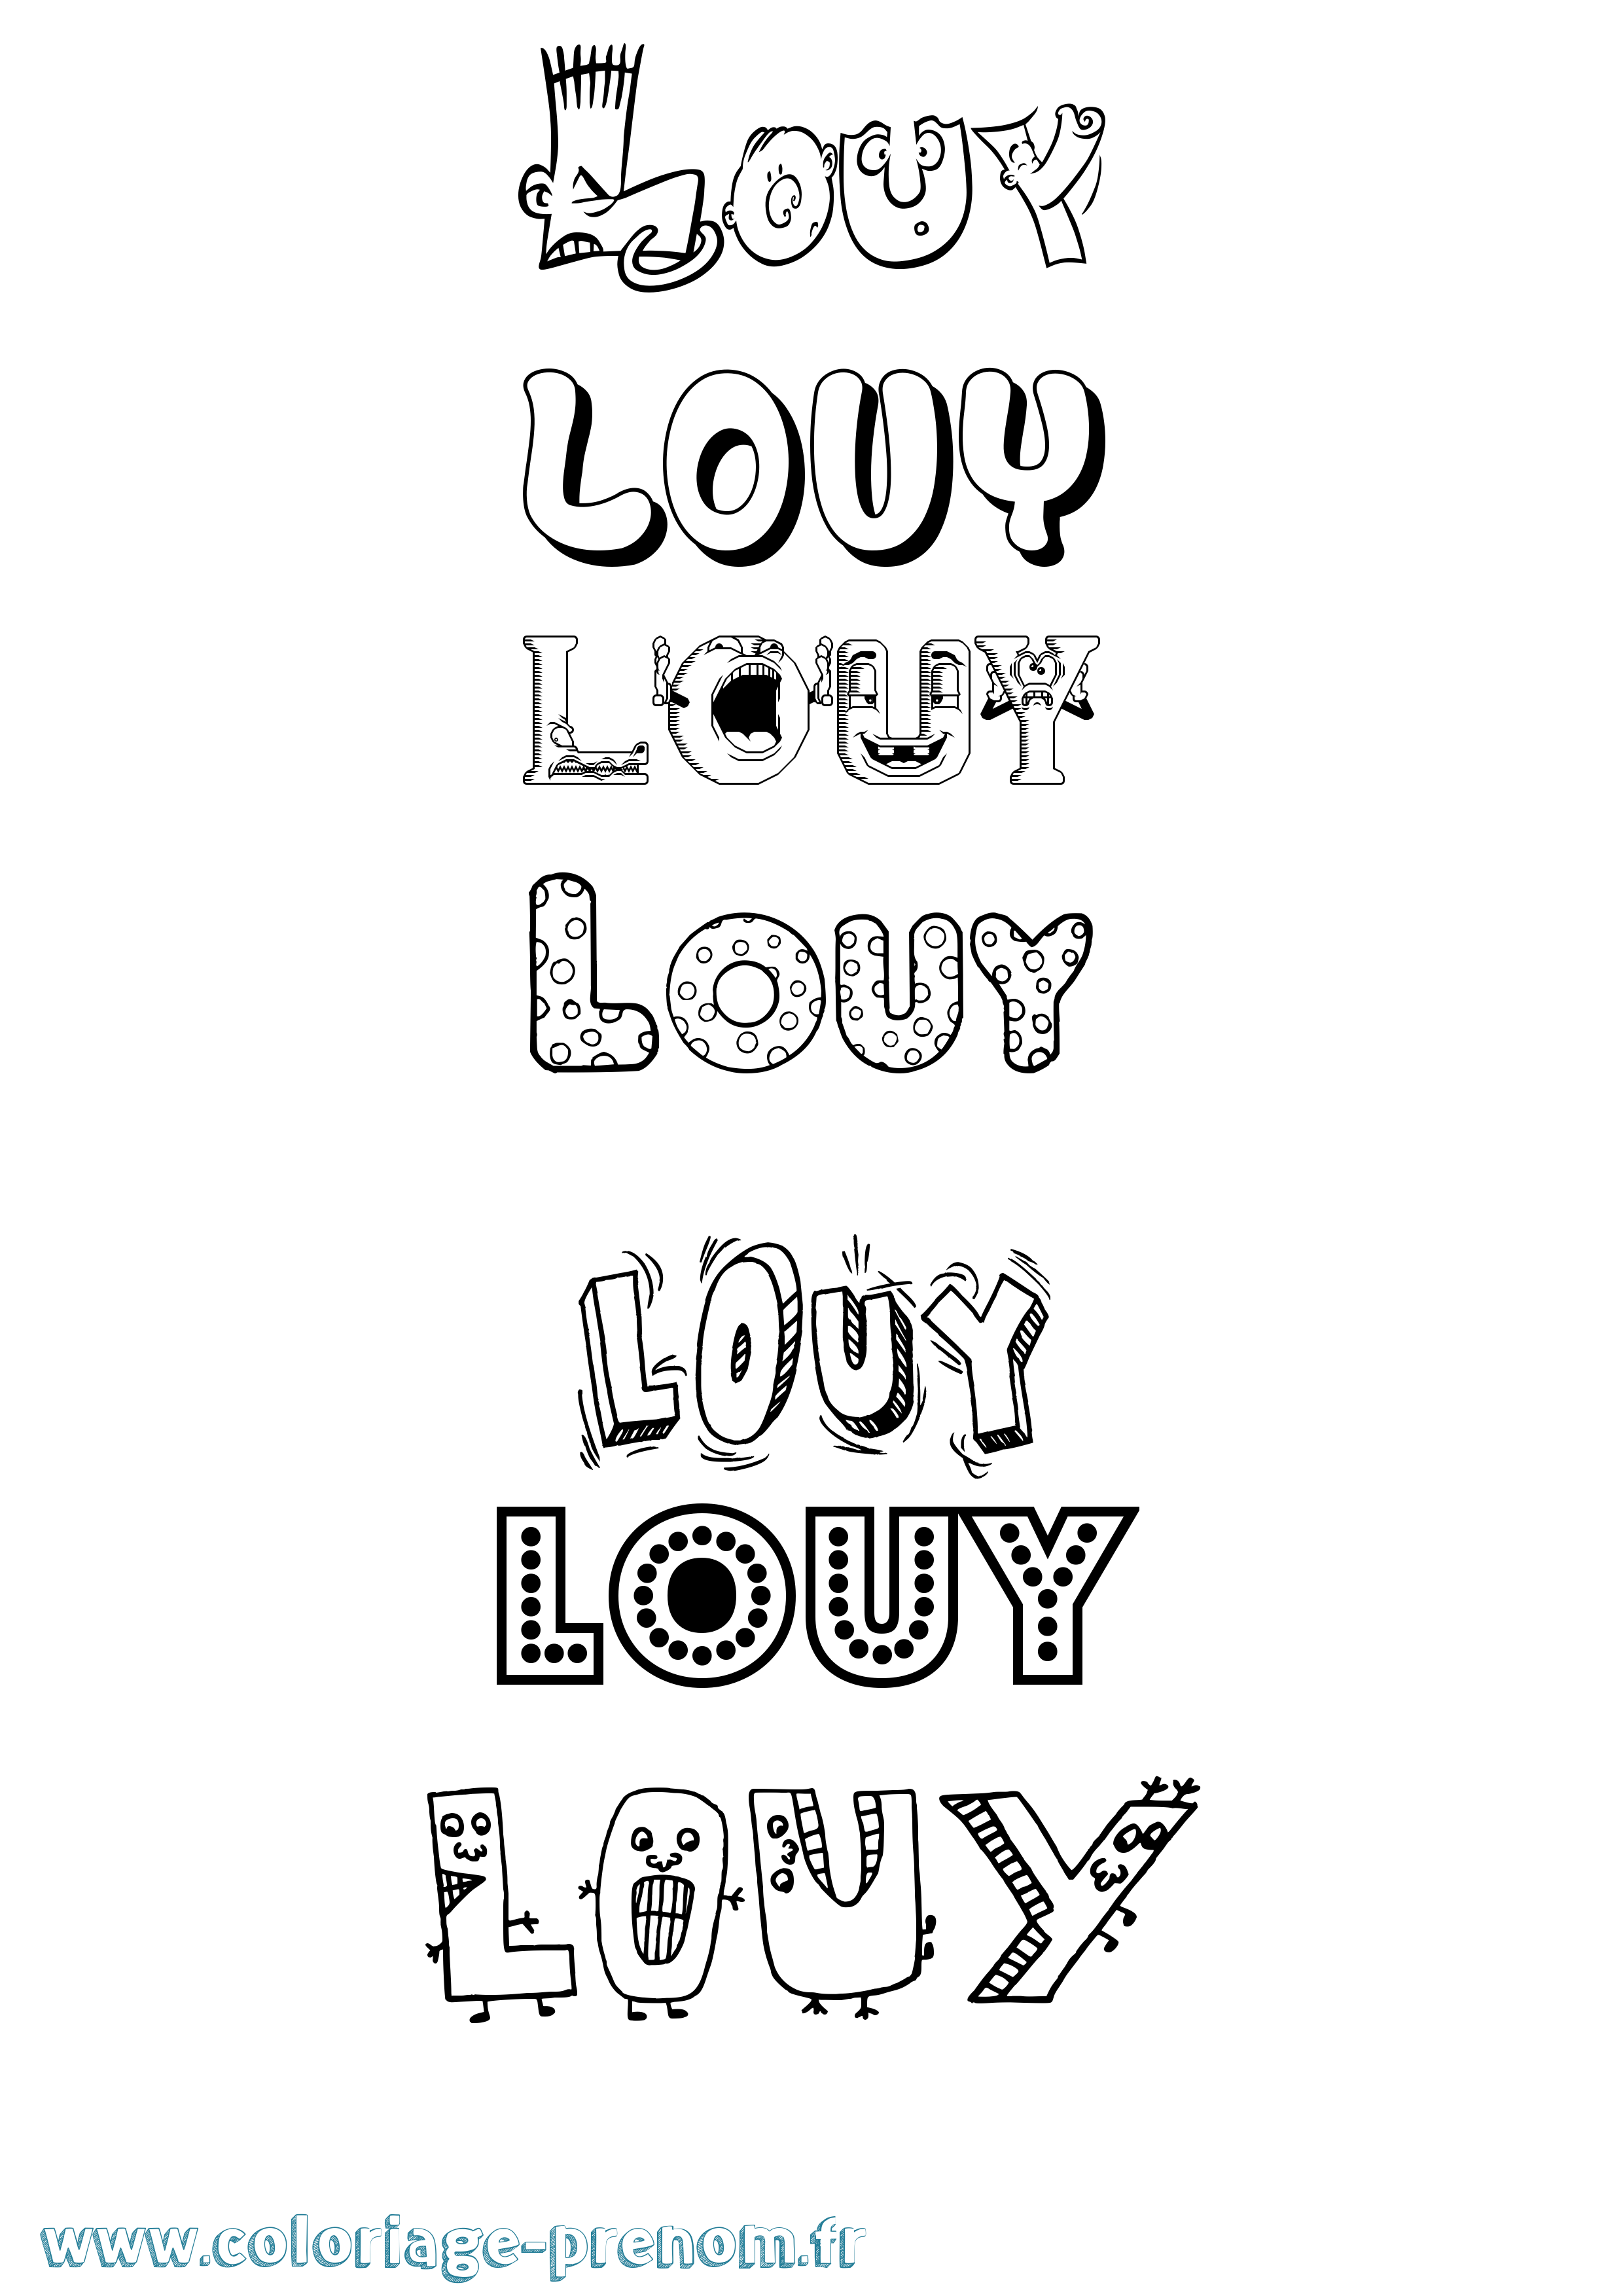 Coloriage prénom Louy Fun